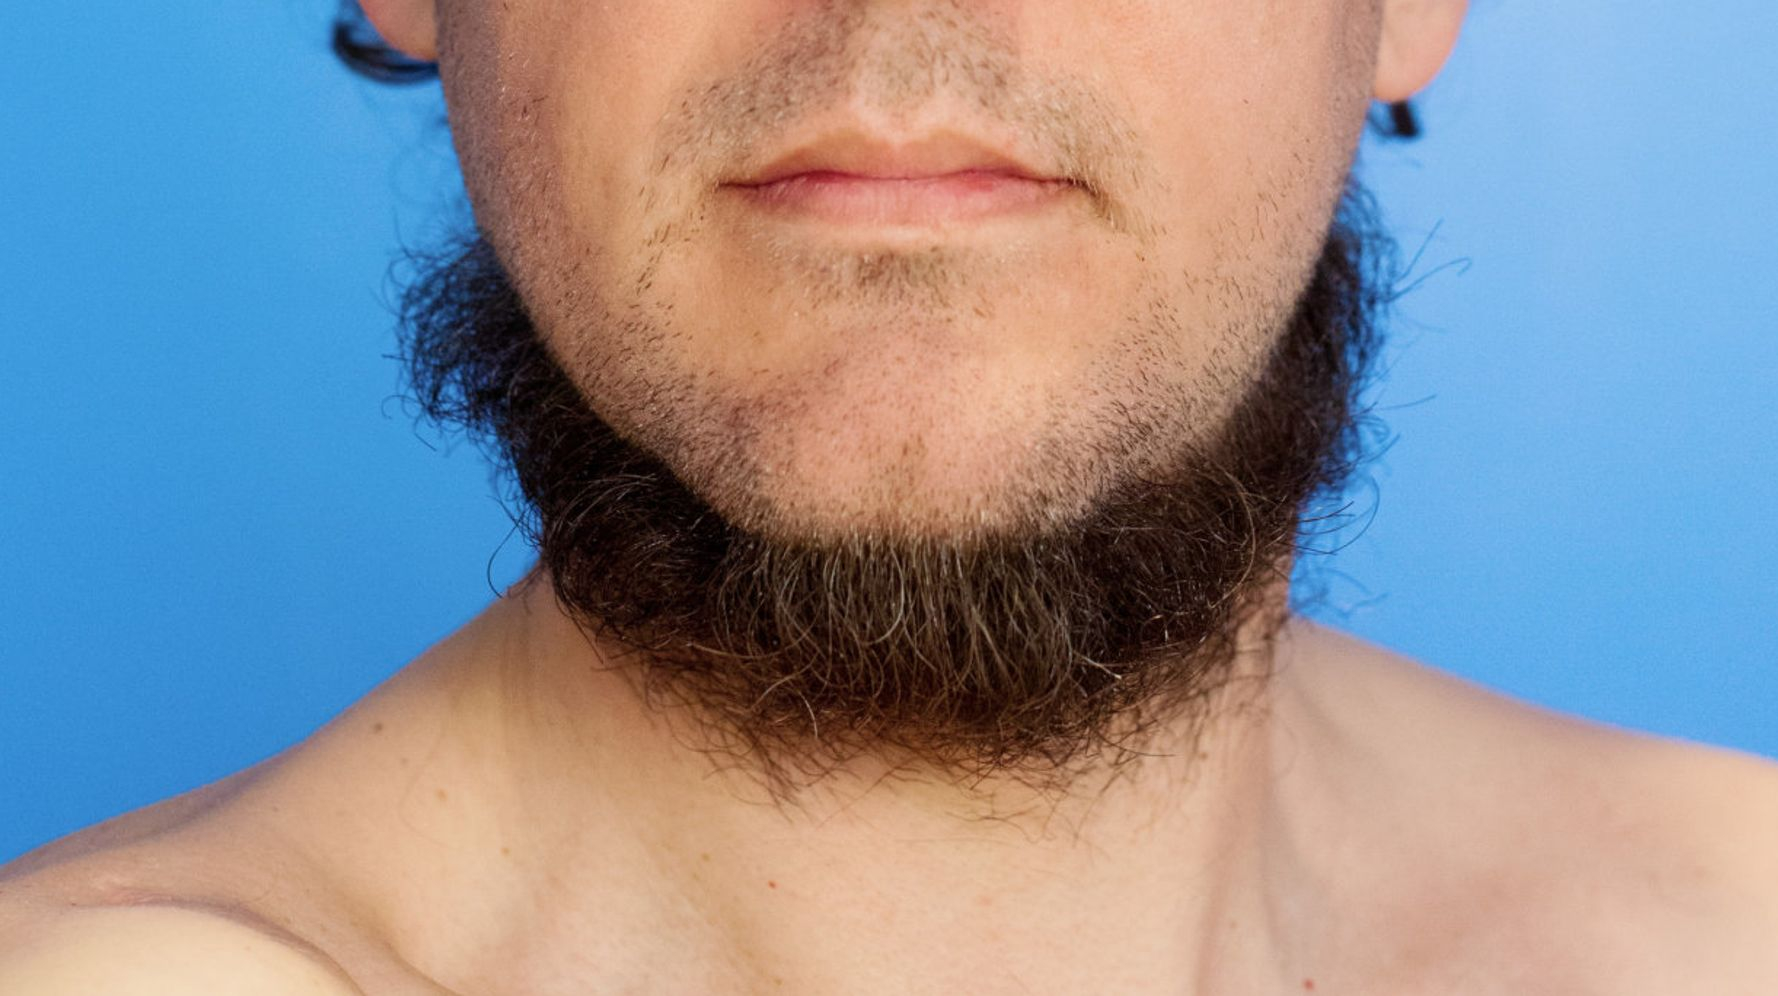 Man with a neck beard